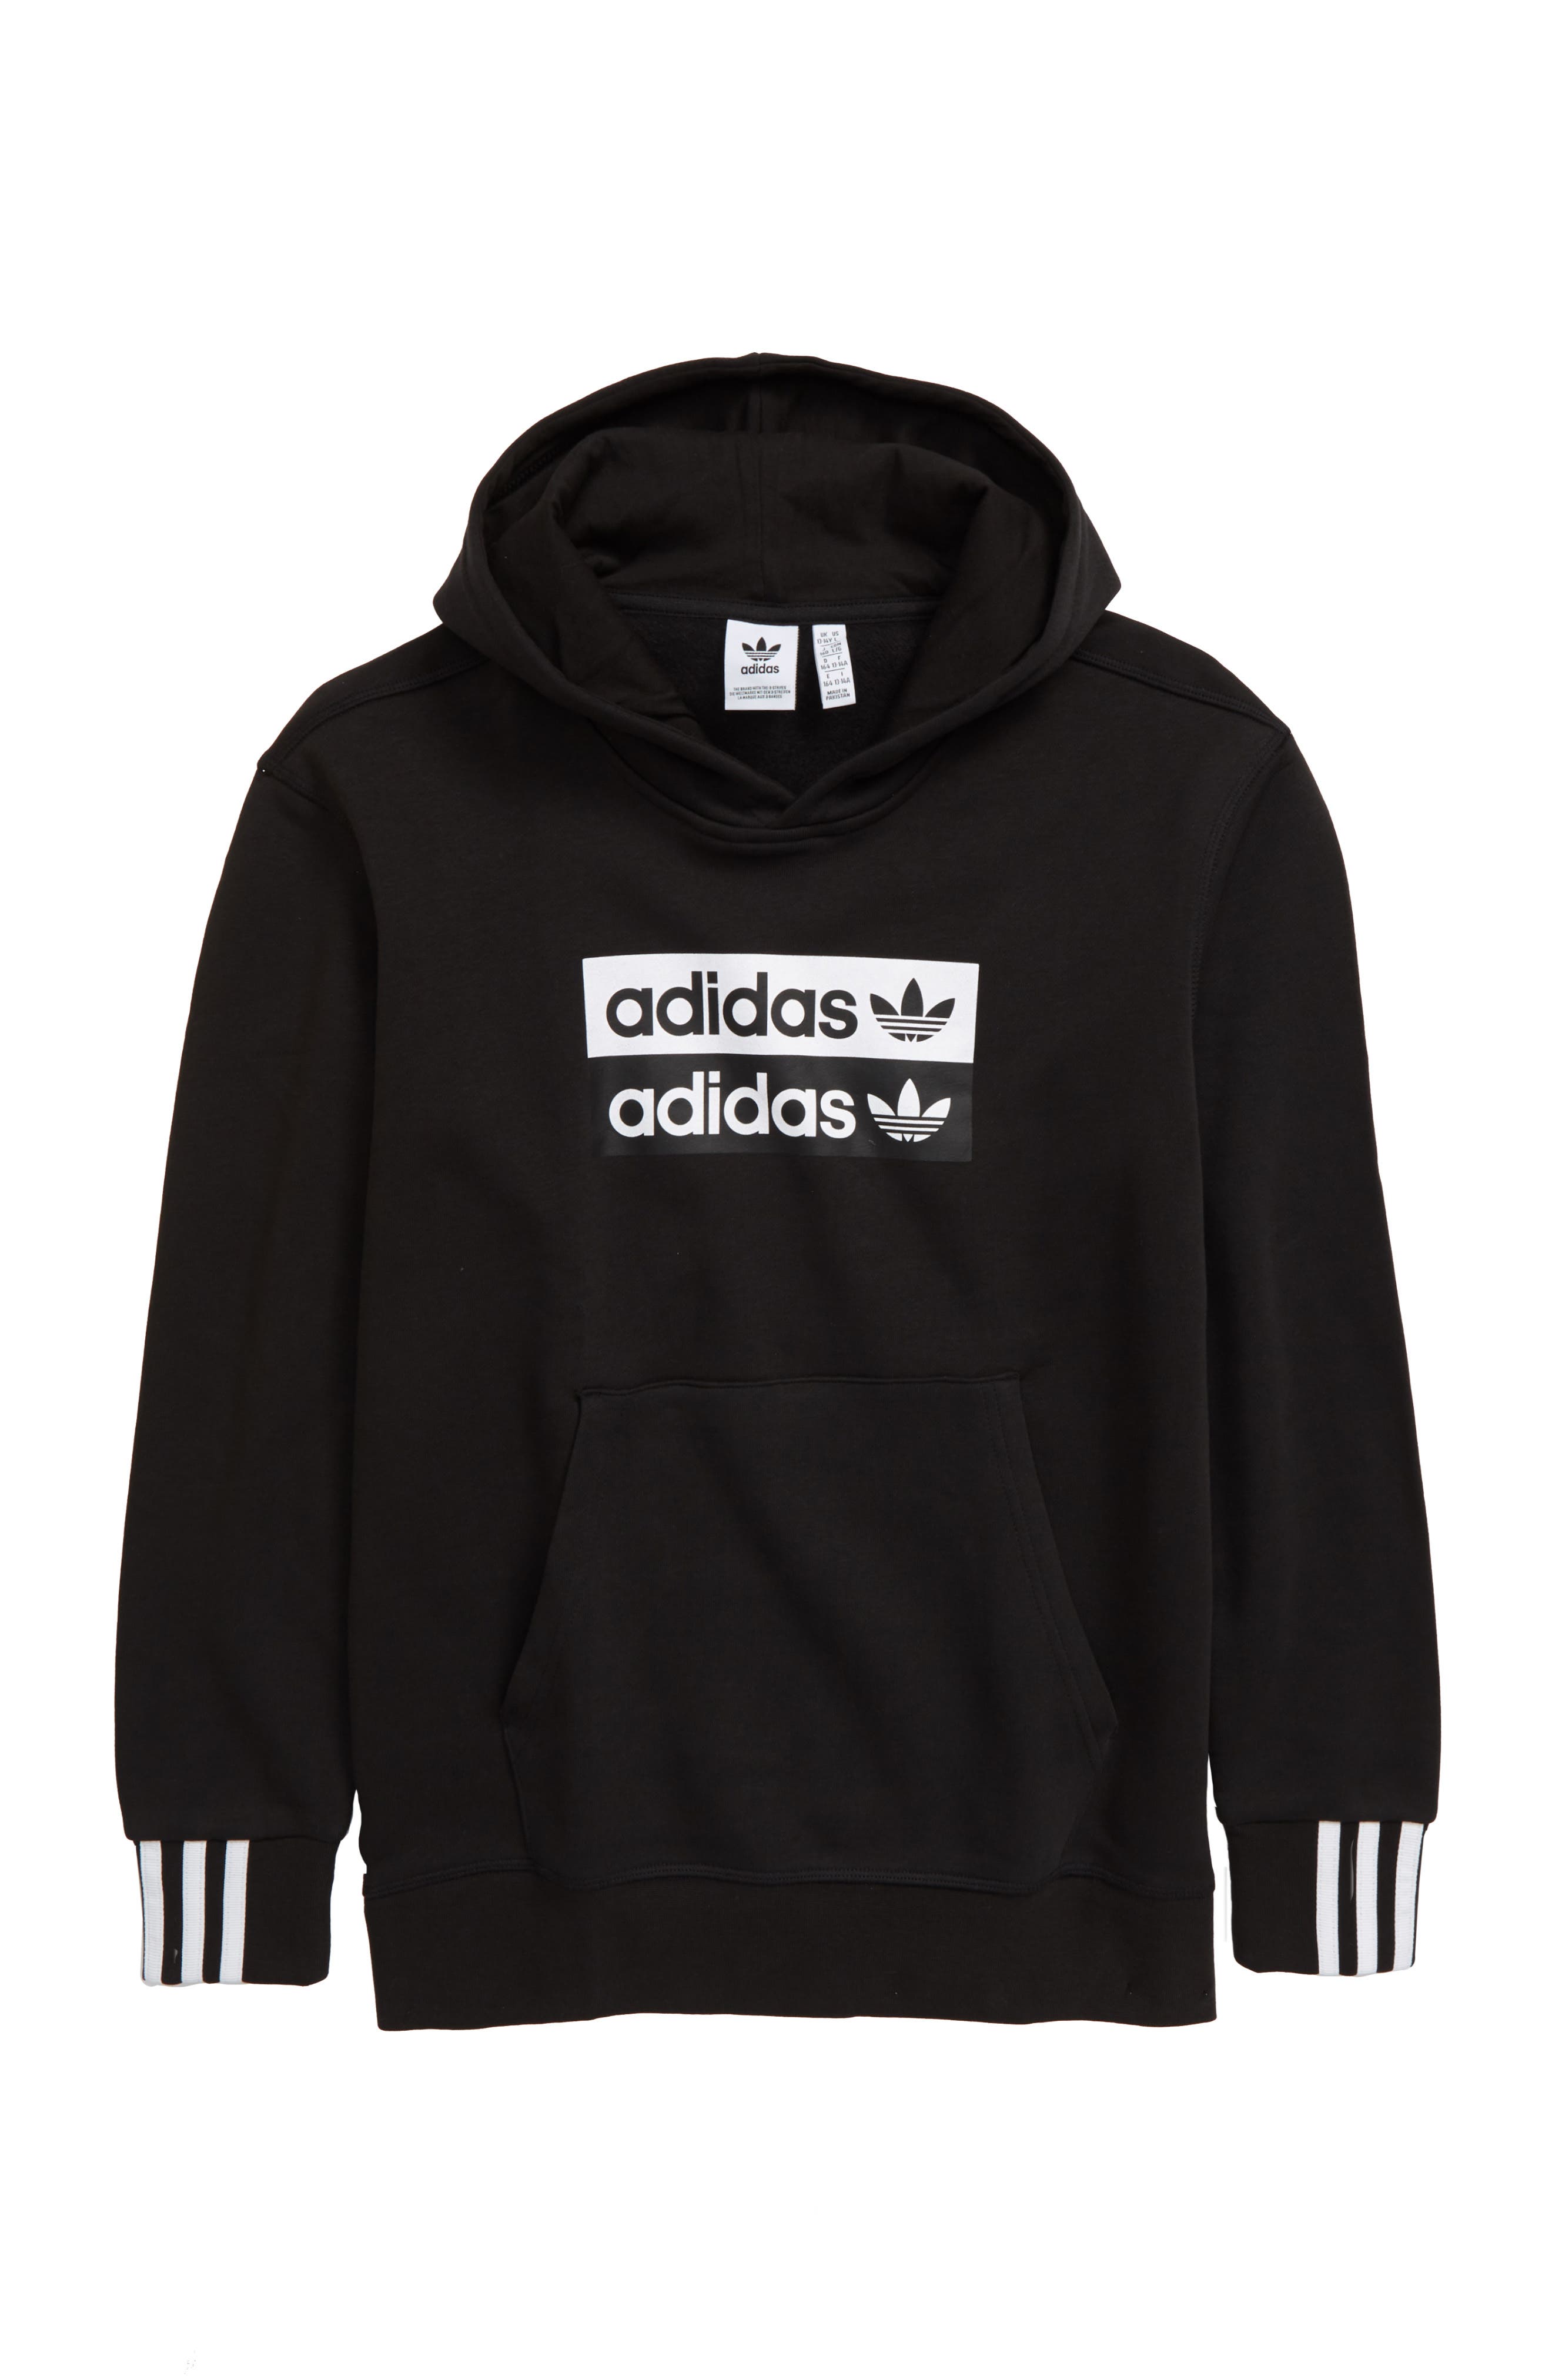 Adidas Originals Kids' Adidas V-ocal Fleece Pullover Hoodie In Black ...